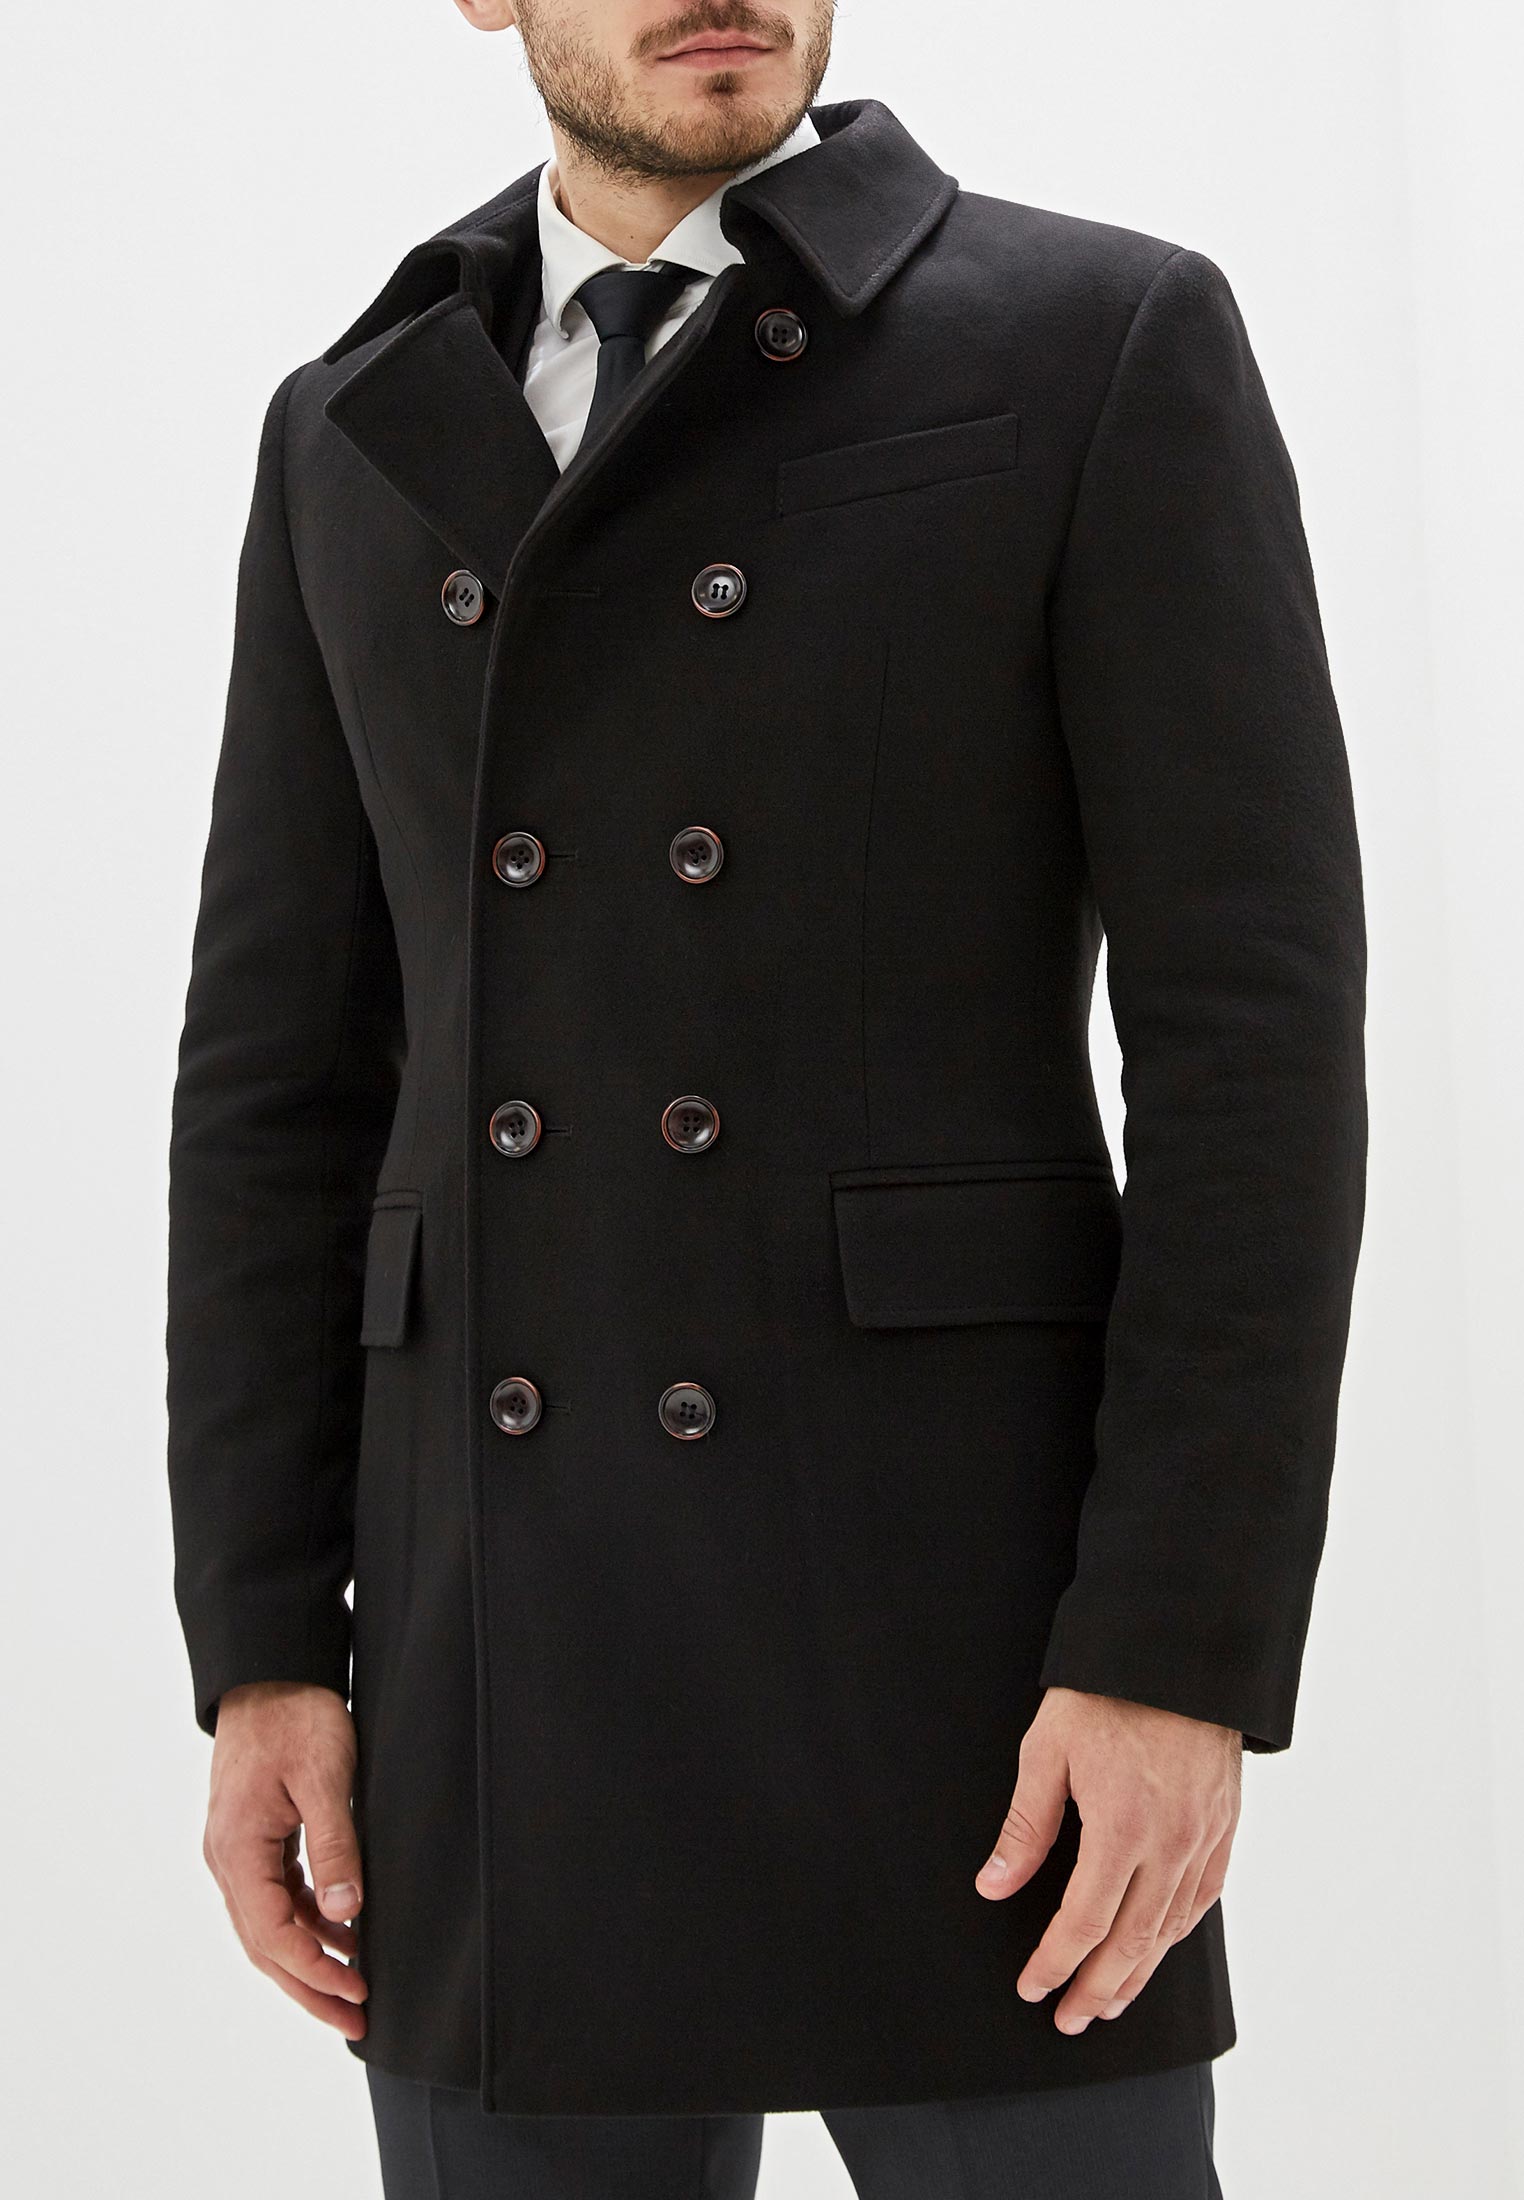 Темное пальто мужское. Пальто Berkytt. Пальто мужское Berkytt 2018. Koton пальто мужское черное. Пальто мужское Delvogeni.